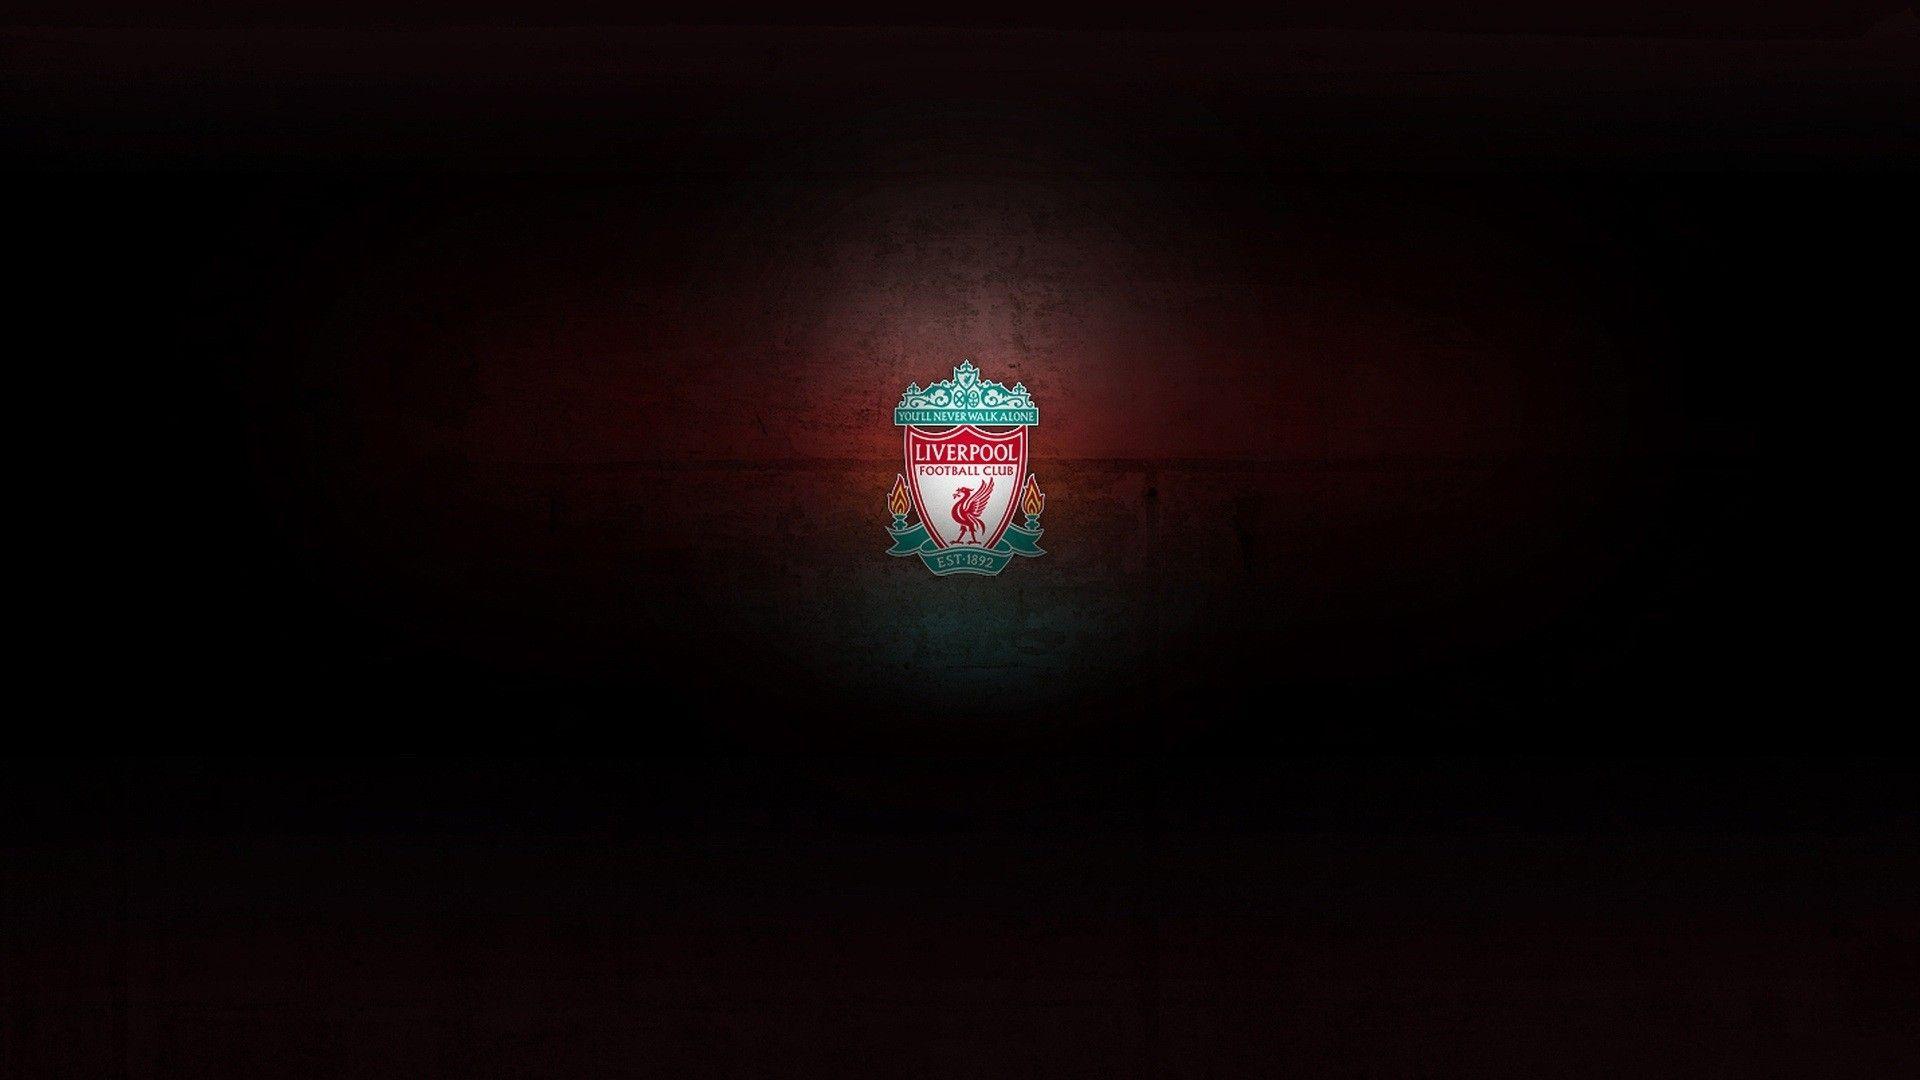 Liverpool Fc. Full HD Widescreen wallpaper for desktop